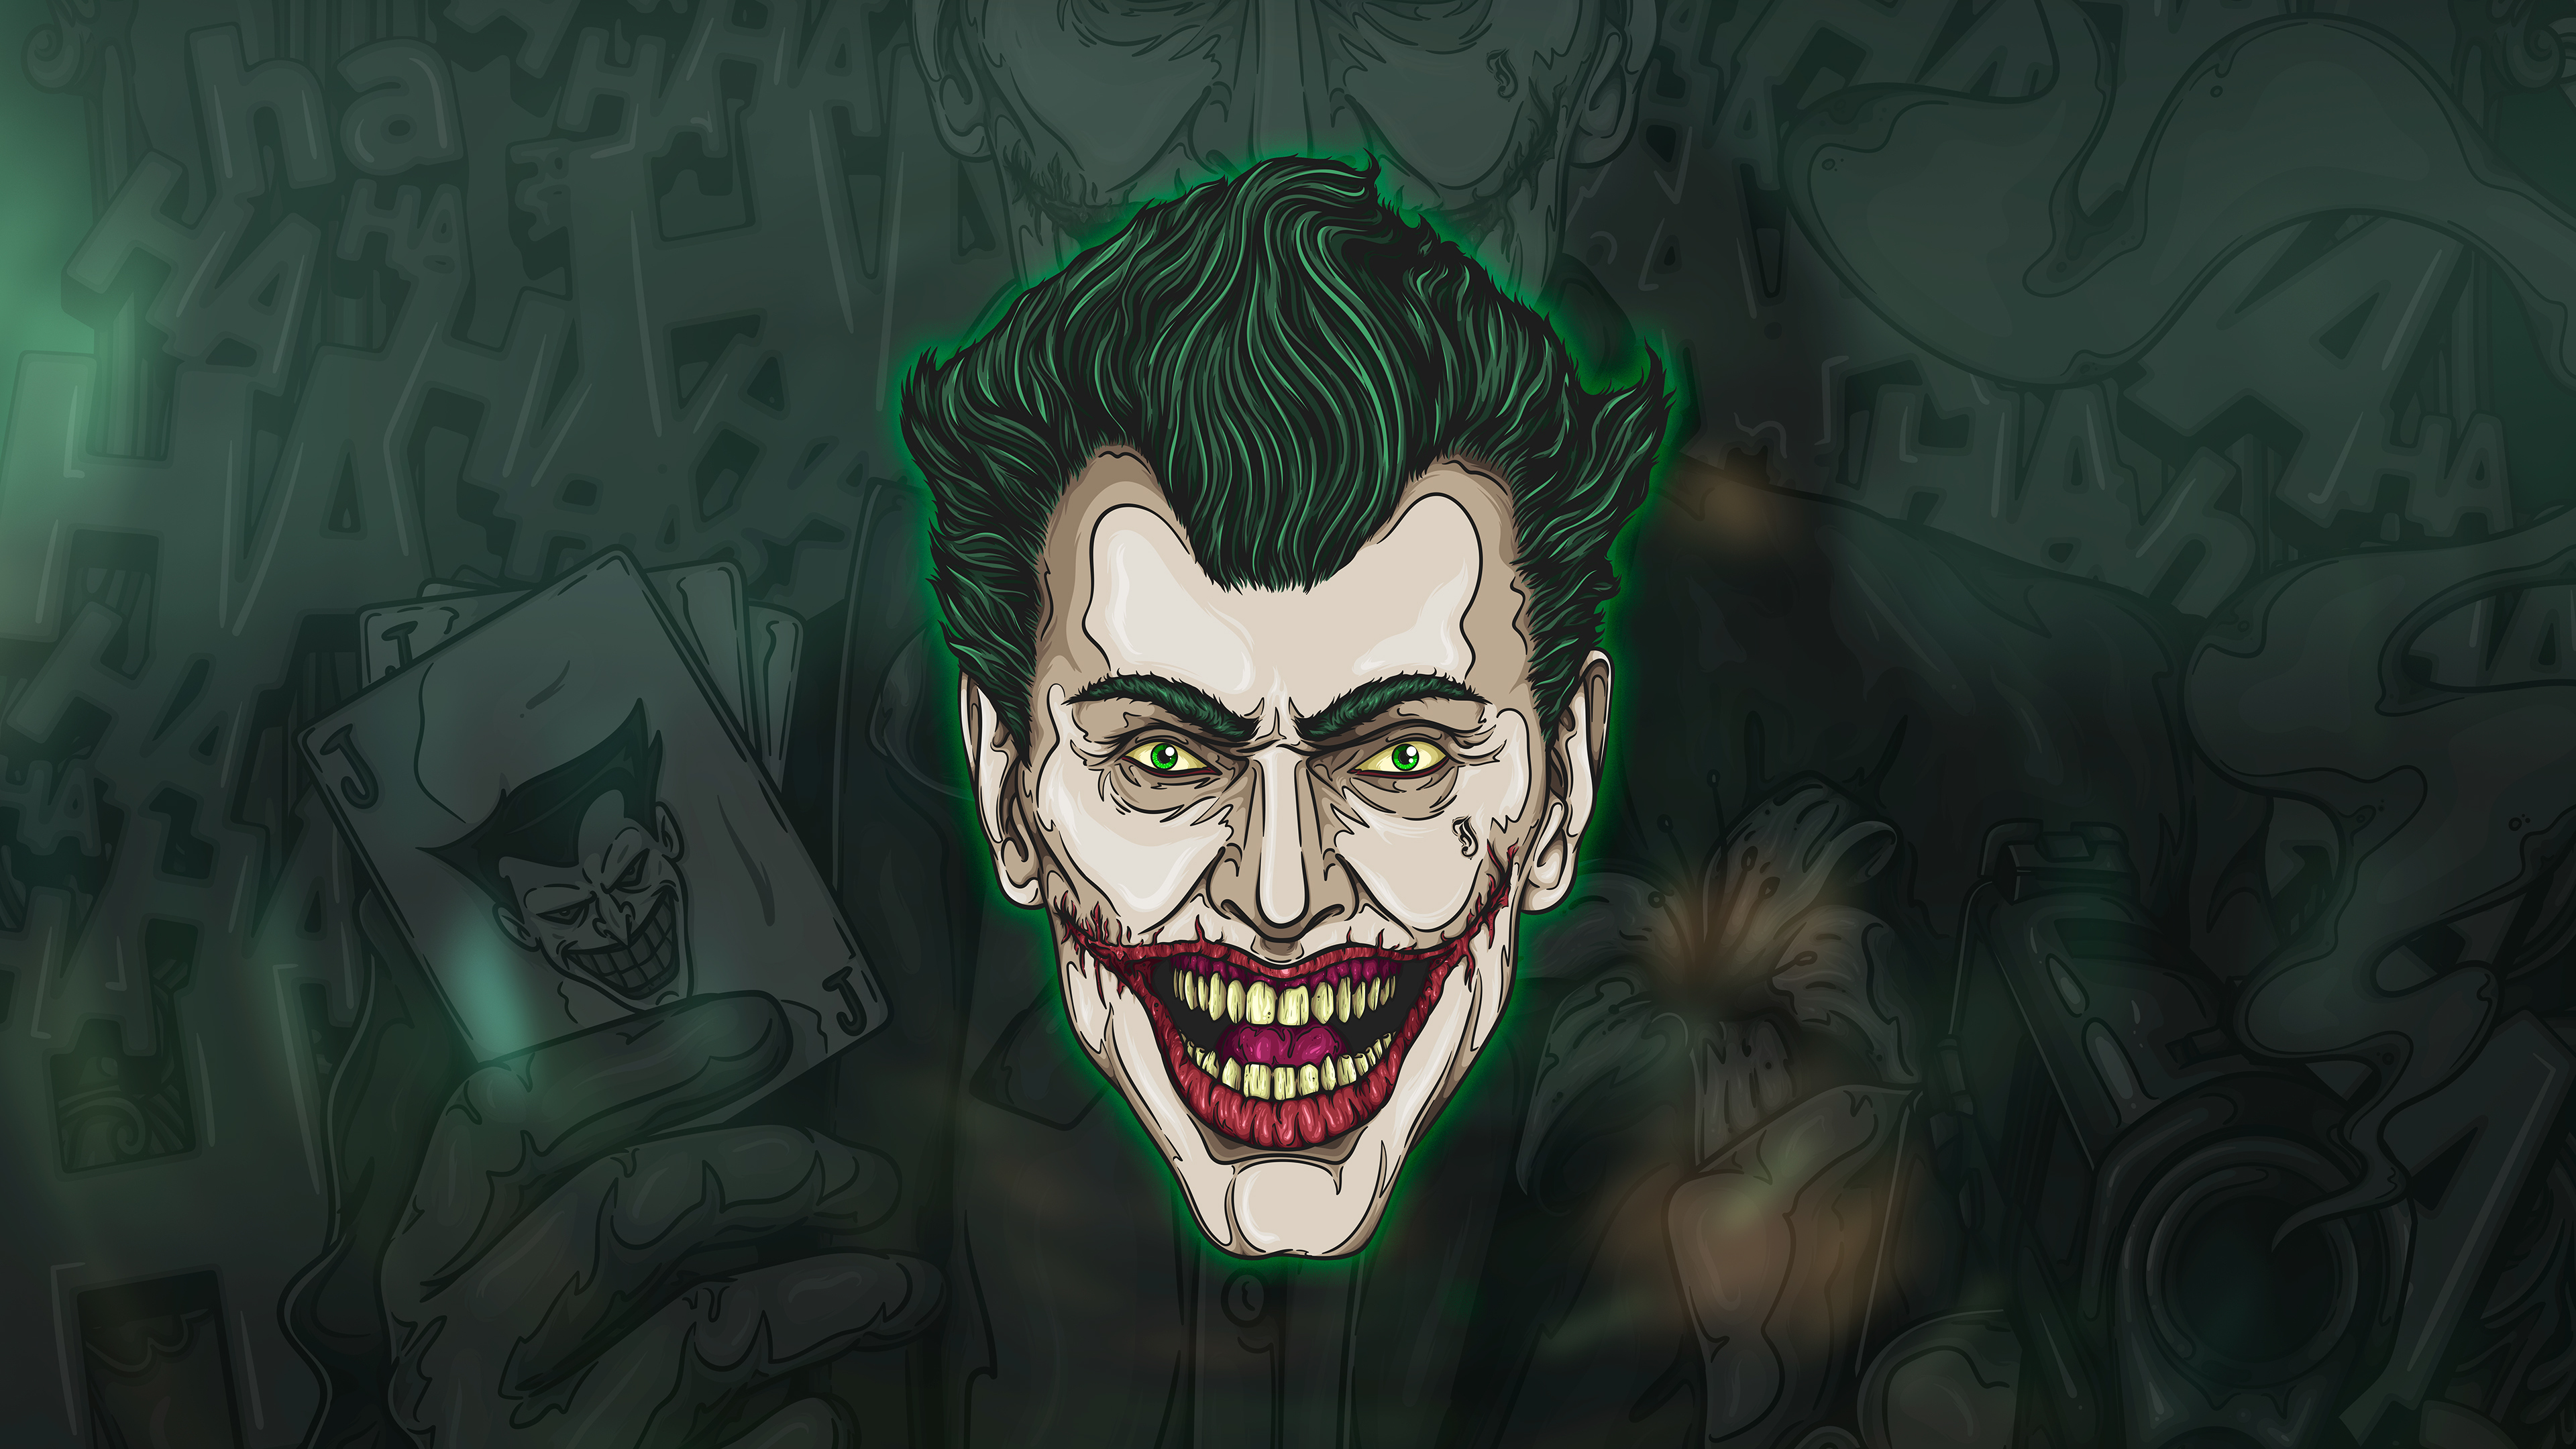 Top 190+ Joker face wallpaper 4k - Snkrsvalue.com